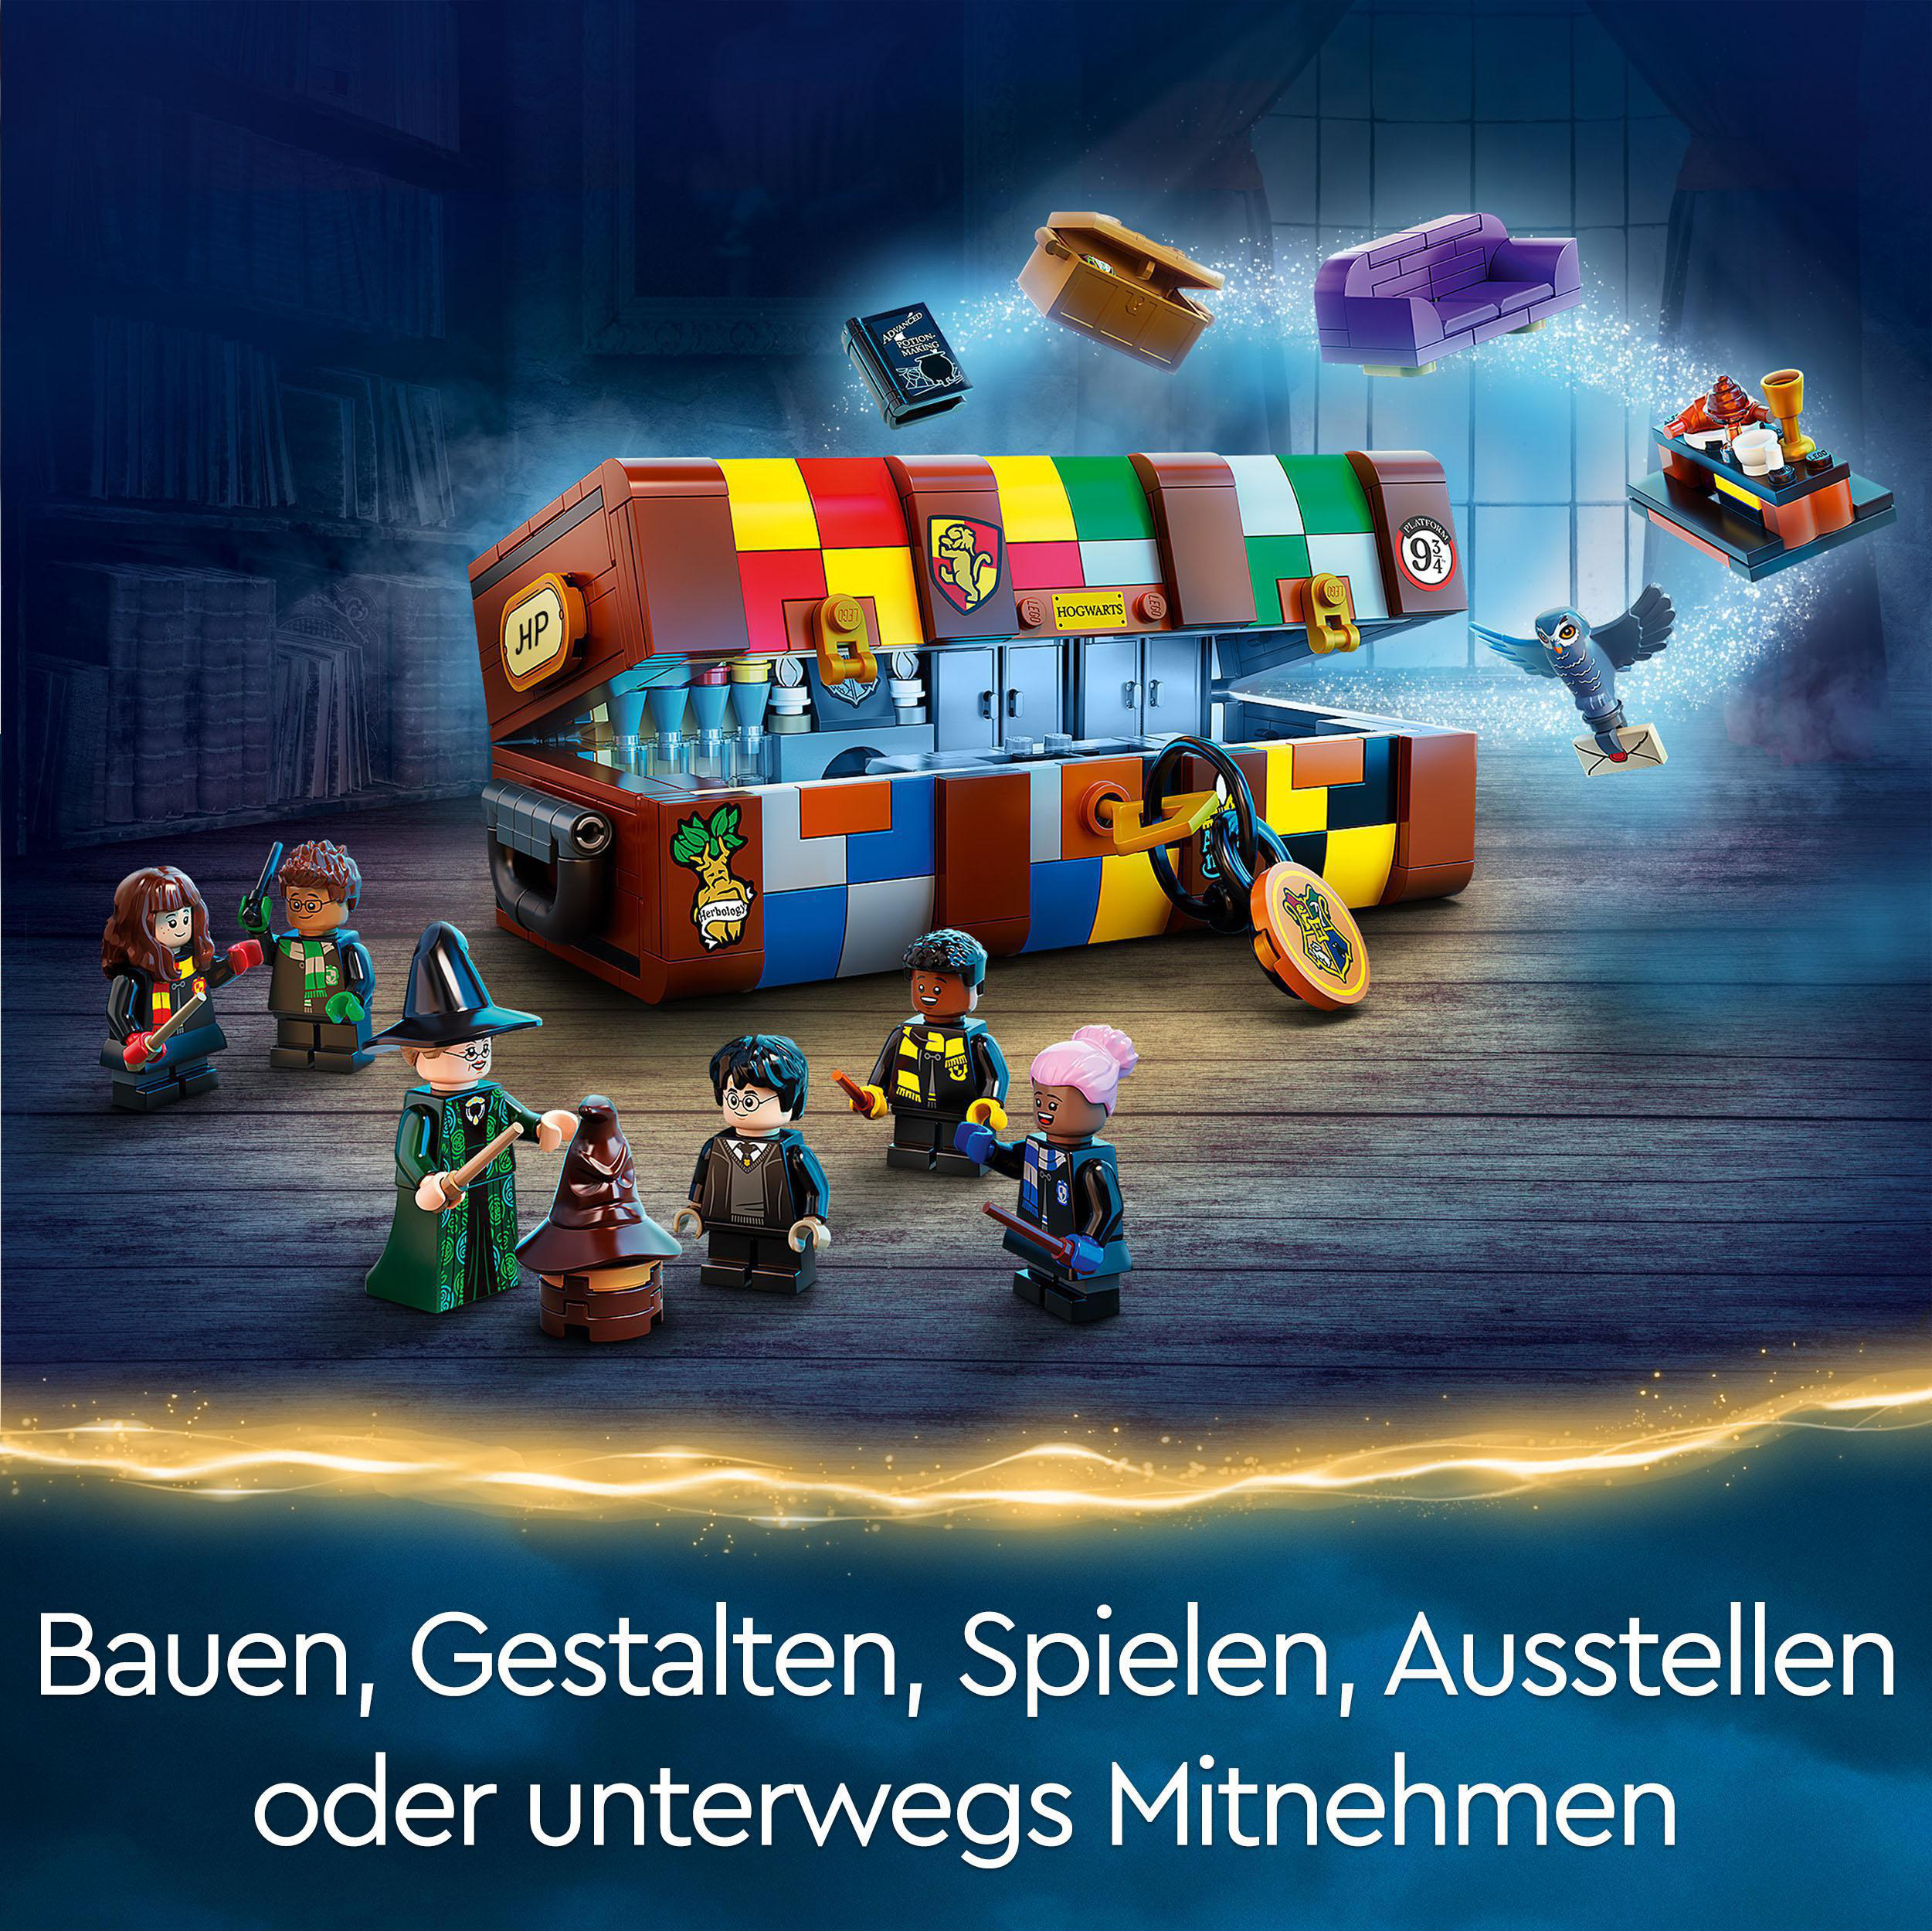 Potter 76399 Harry Mehrfarbig Bausatz, Hogwarts™ Zauberkoffer LEGO